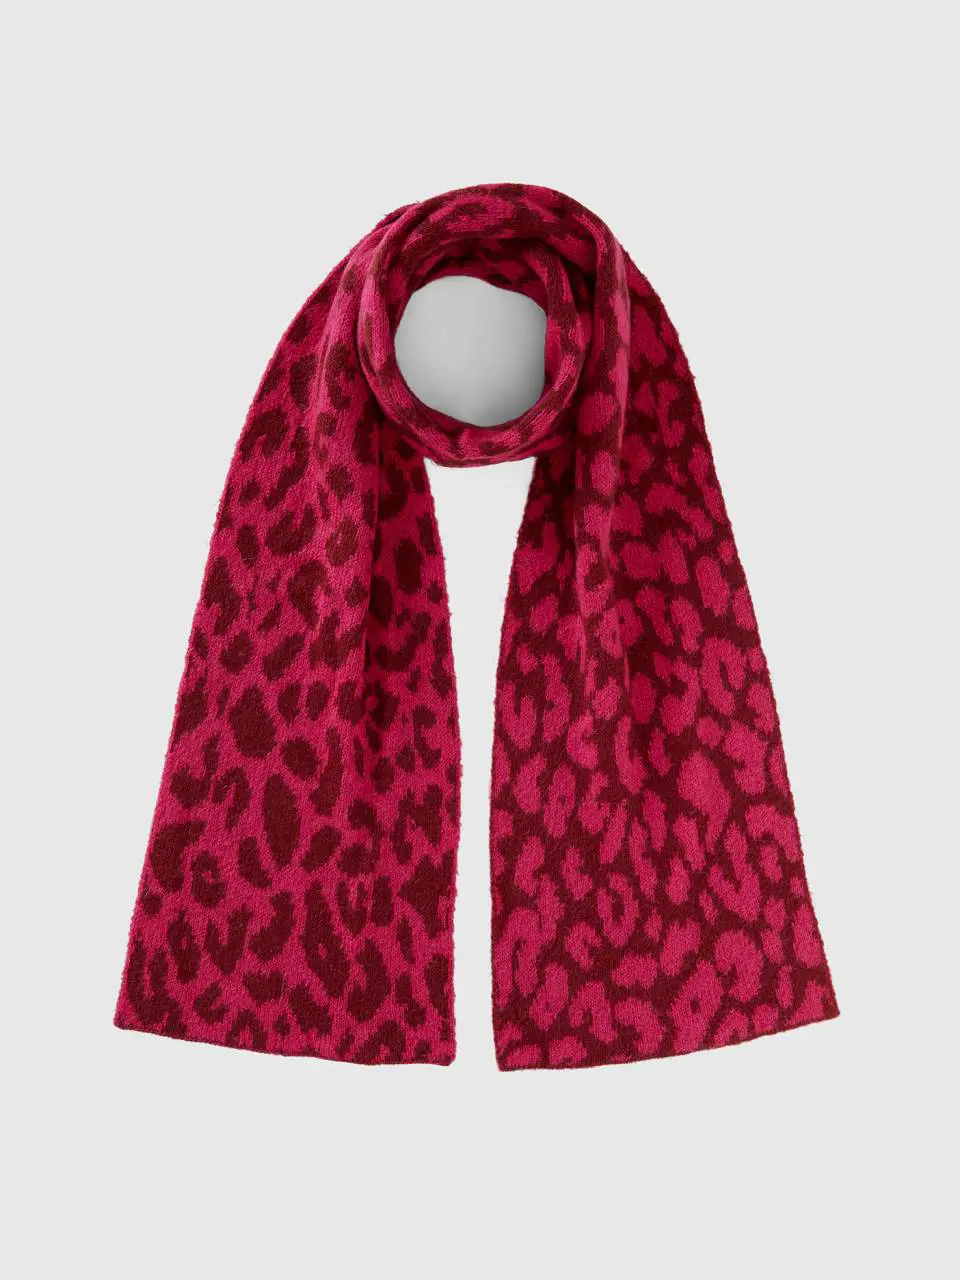 Benetton animal print scarf in mohair blend. 1